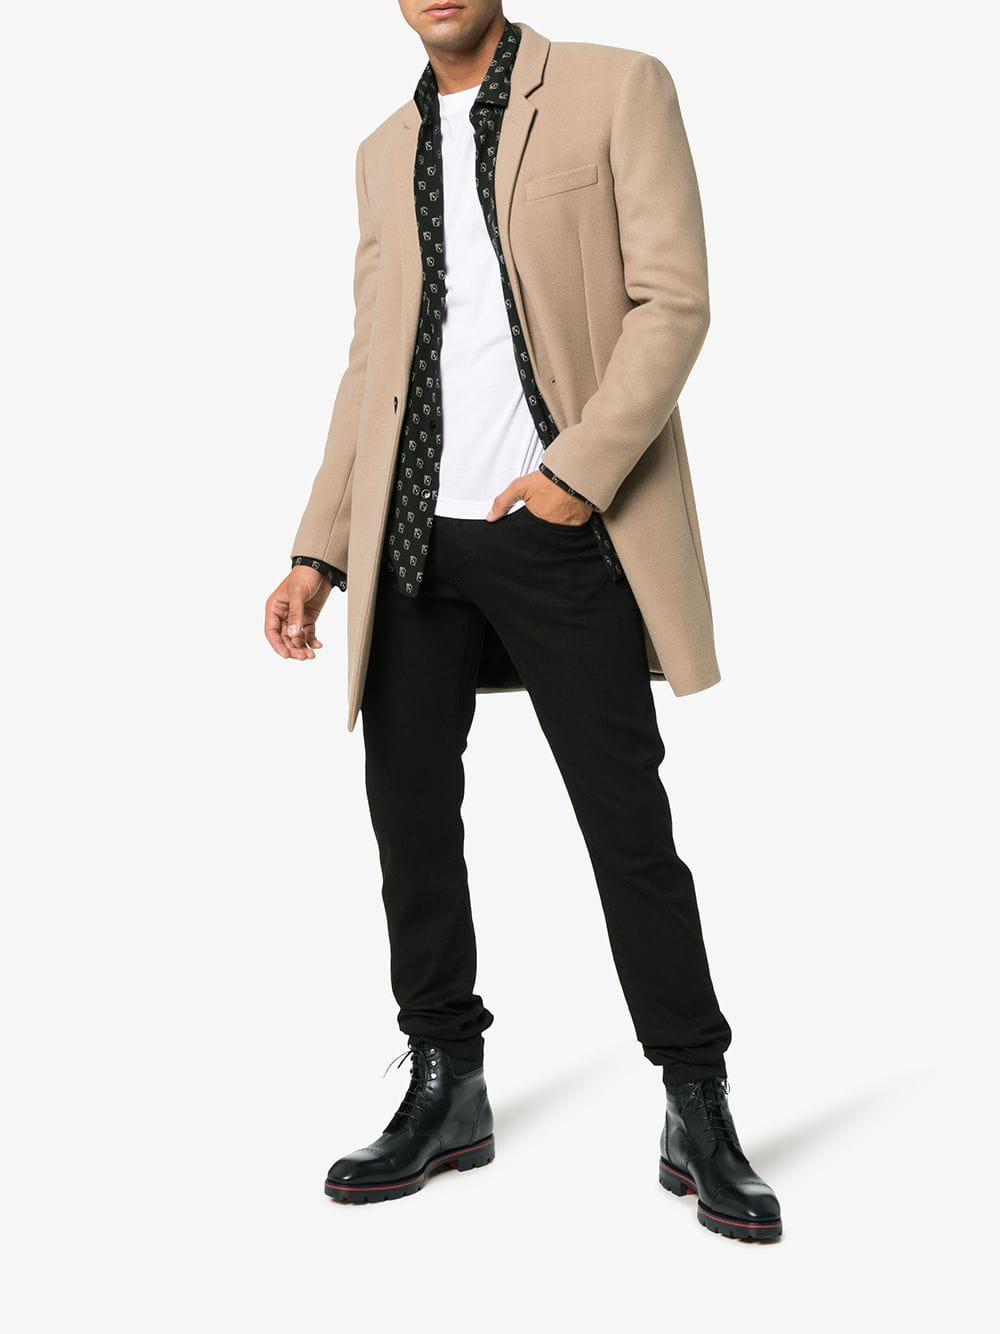 Christian Louboutin Mens Dress Boots Cheap Sale | website.jkuat.ac.ke